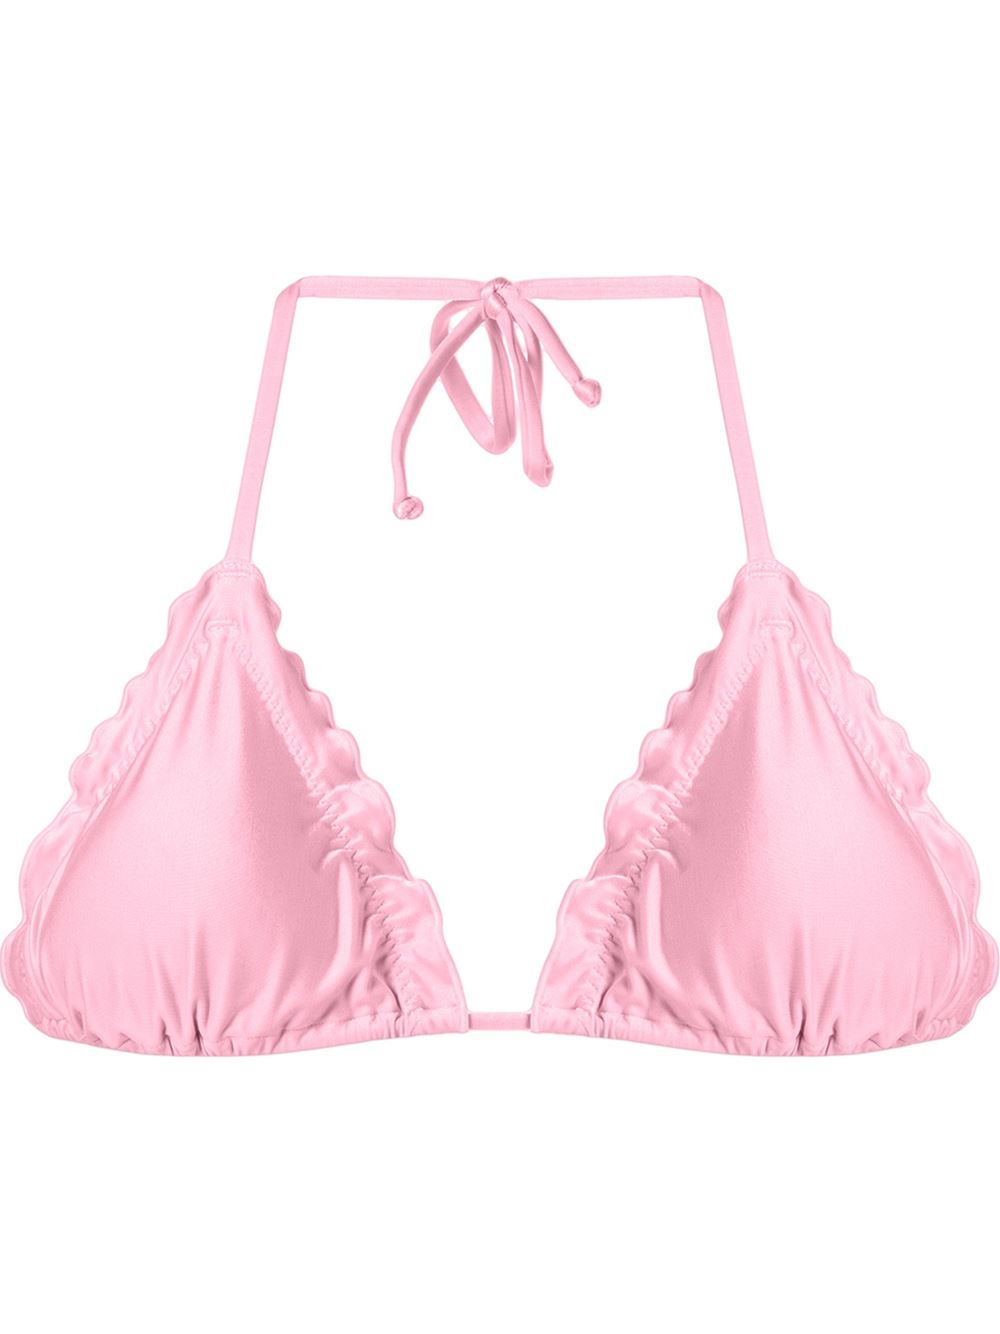 Lyst - Skinbiquini Ruffled Trim Triangle Bikini Top In Pink-9096